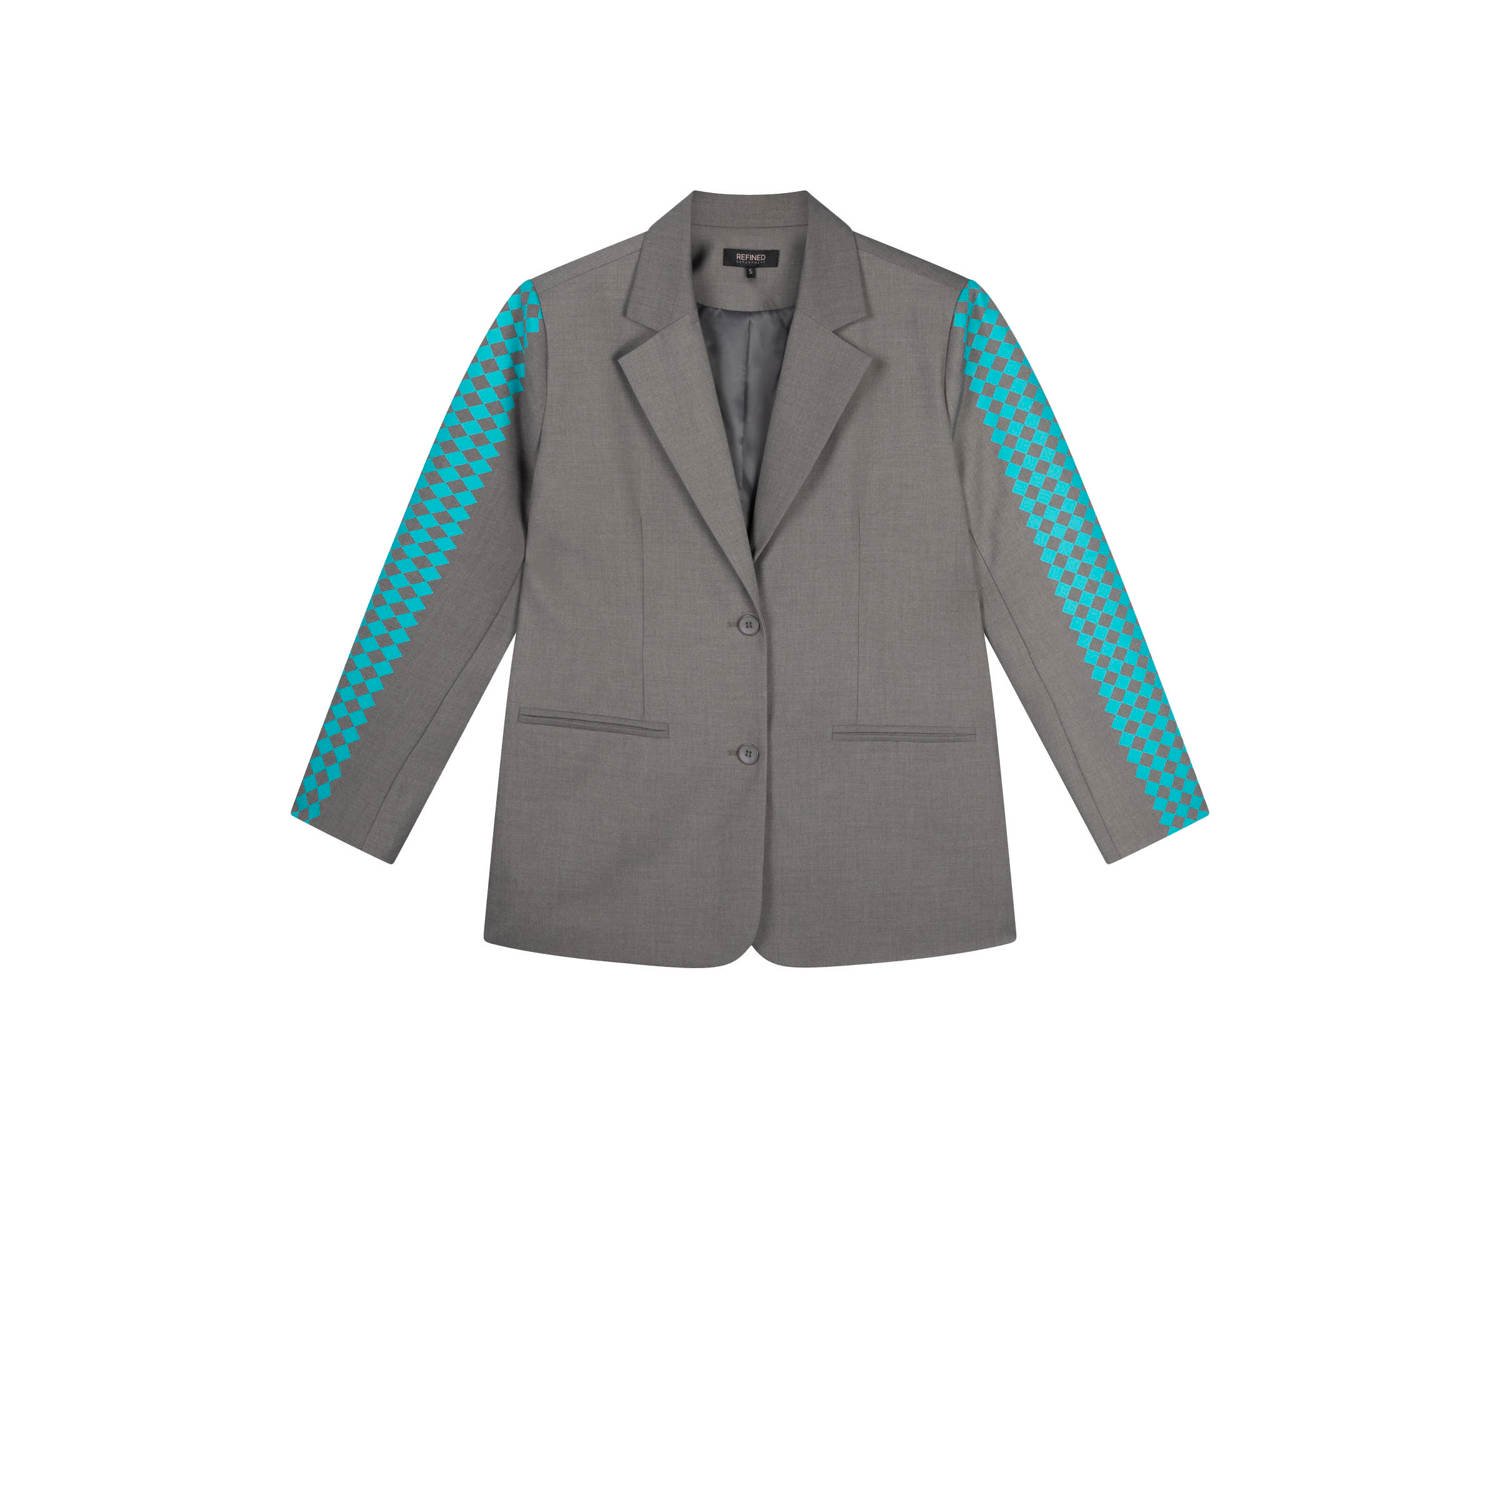 Refined Department oversized blazer Bodi grijs turquoise